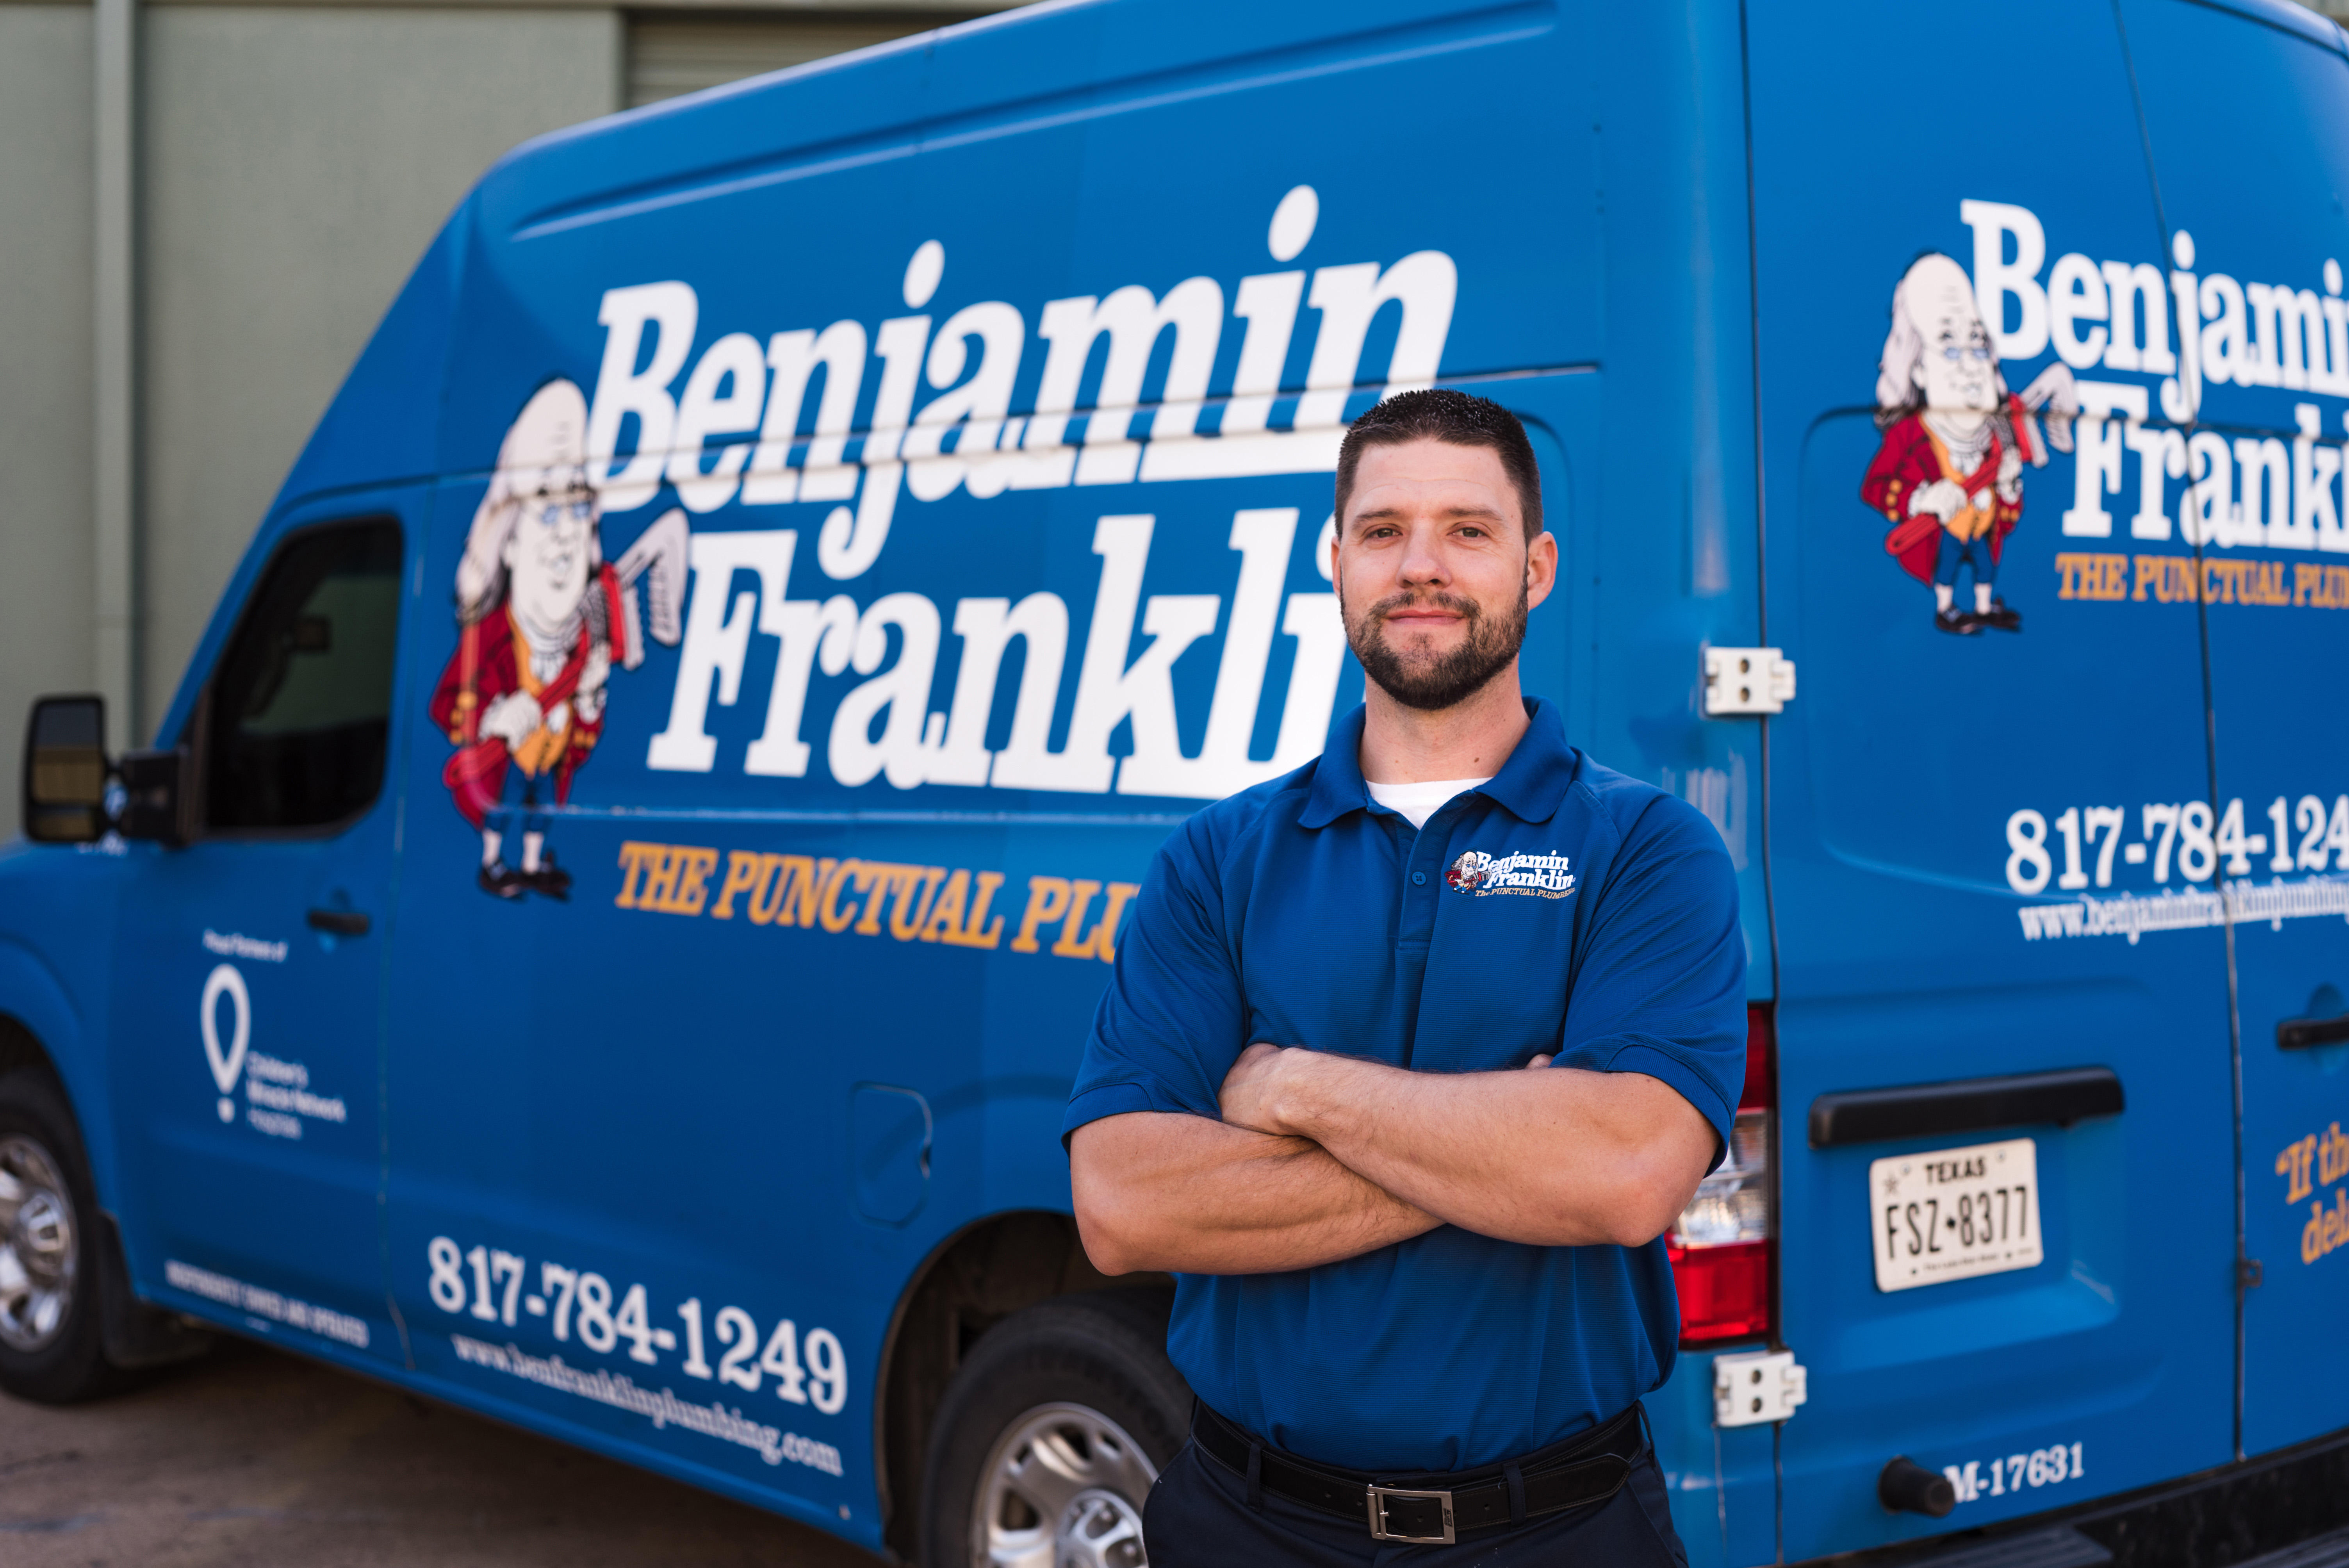 Benjamin Franklin Plumbing of Fort Worth & Arlington Texas area service plumber.